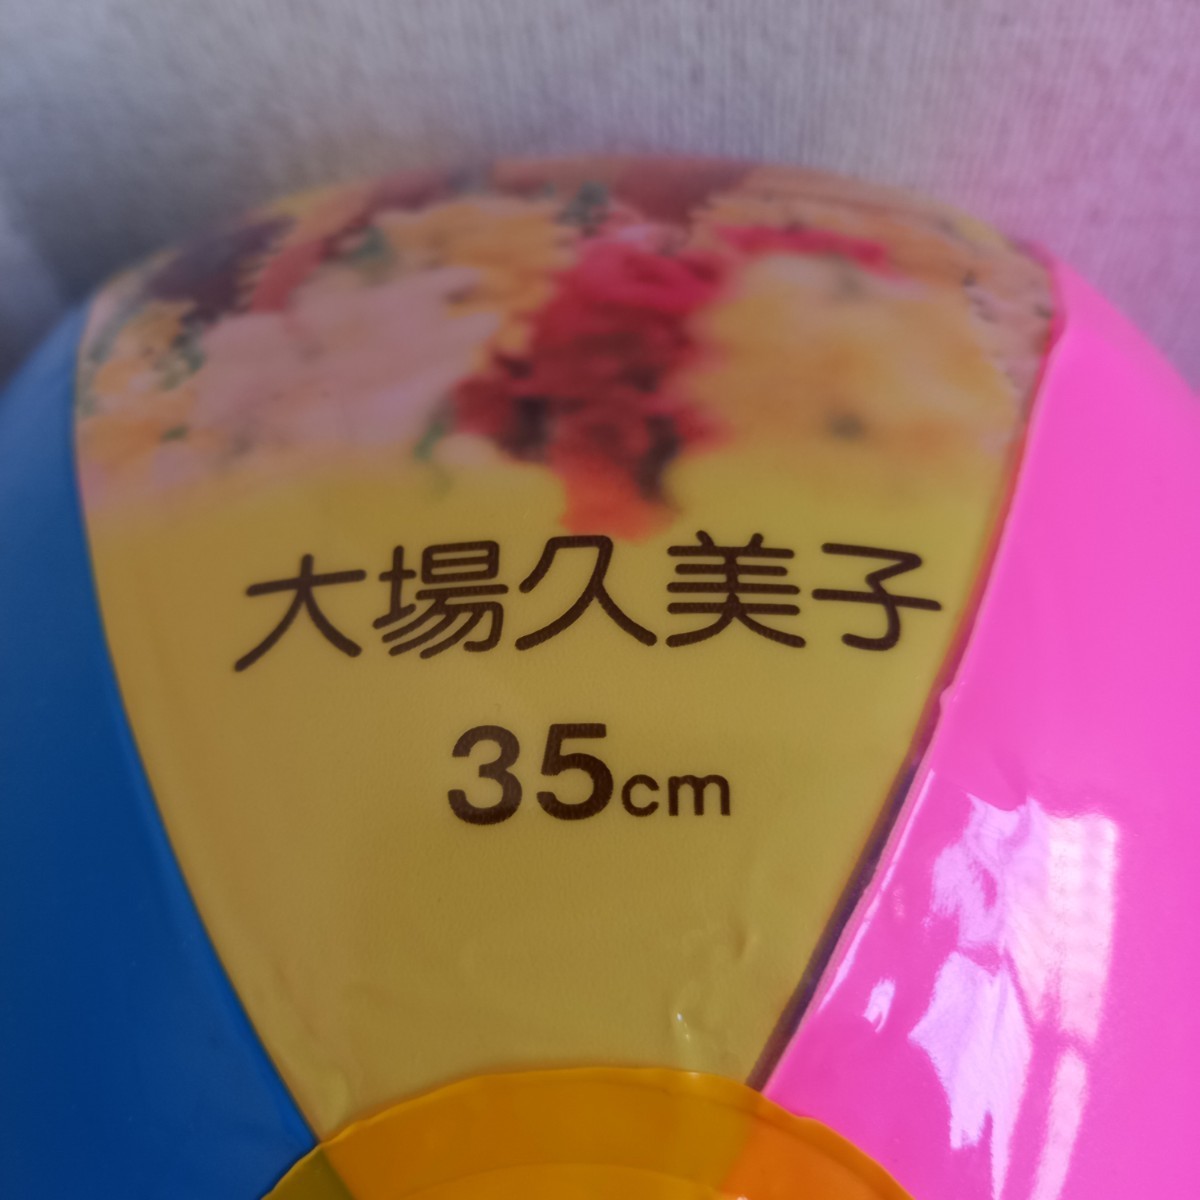  Showa Retro Ooba Kumiko пляжный мяч 35cm б/у товар 